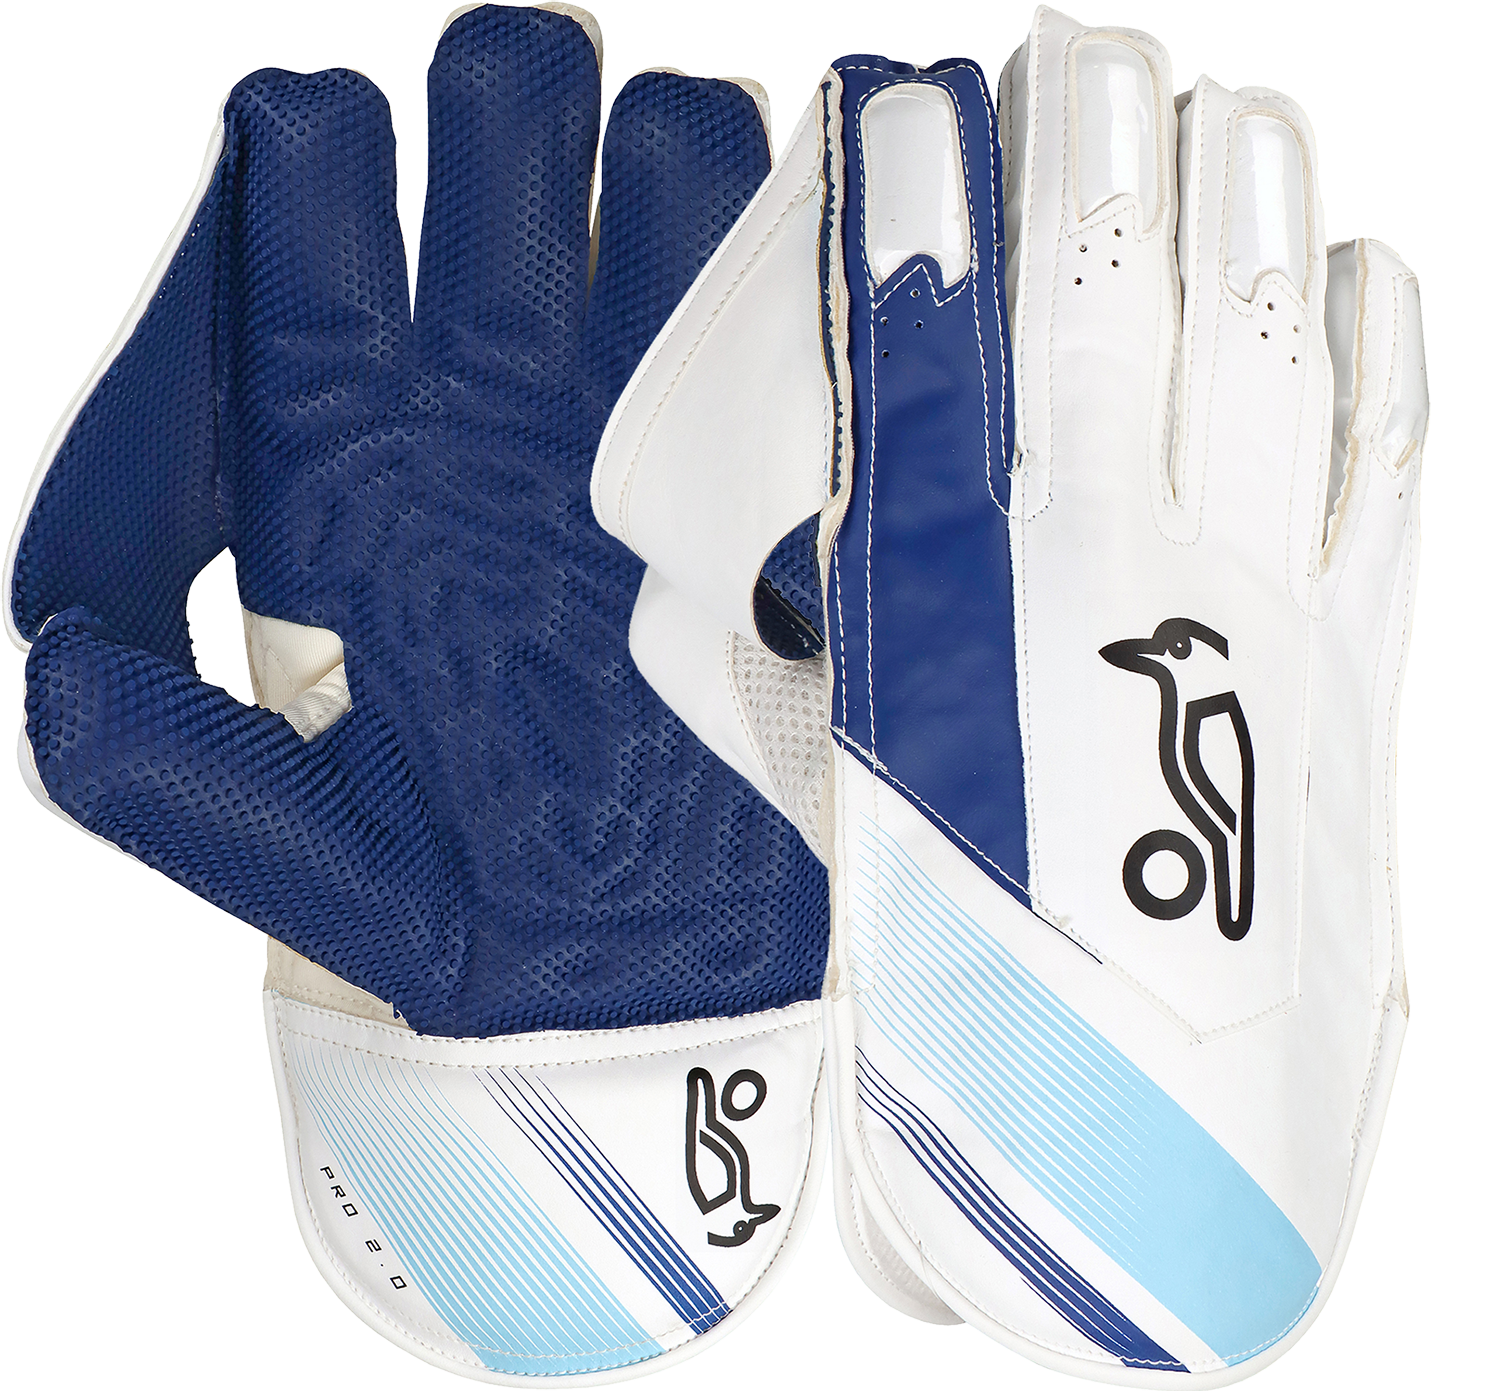 Kookaburra-Pro-2.0-Wicket-Keeping-Gloves